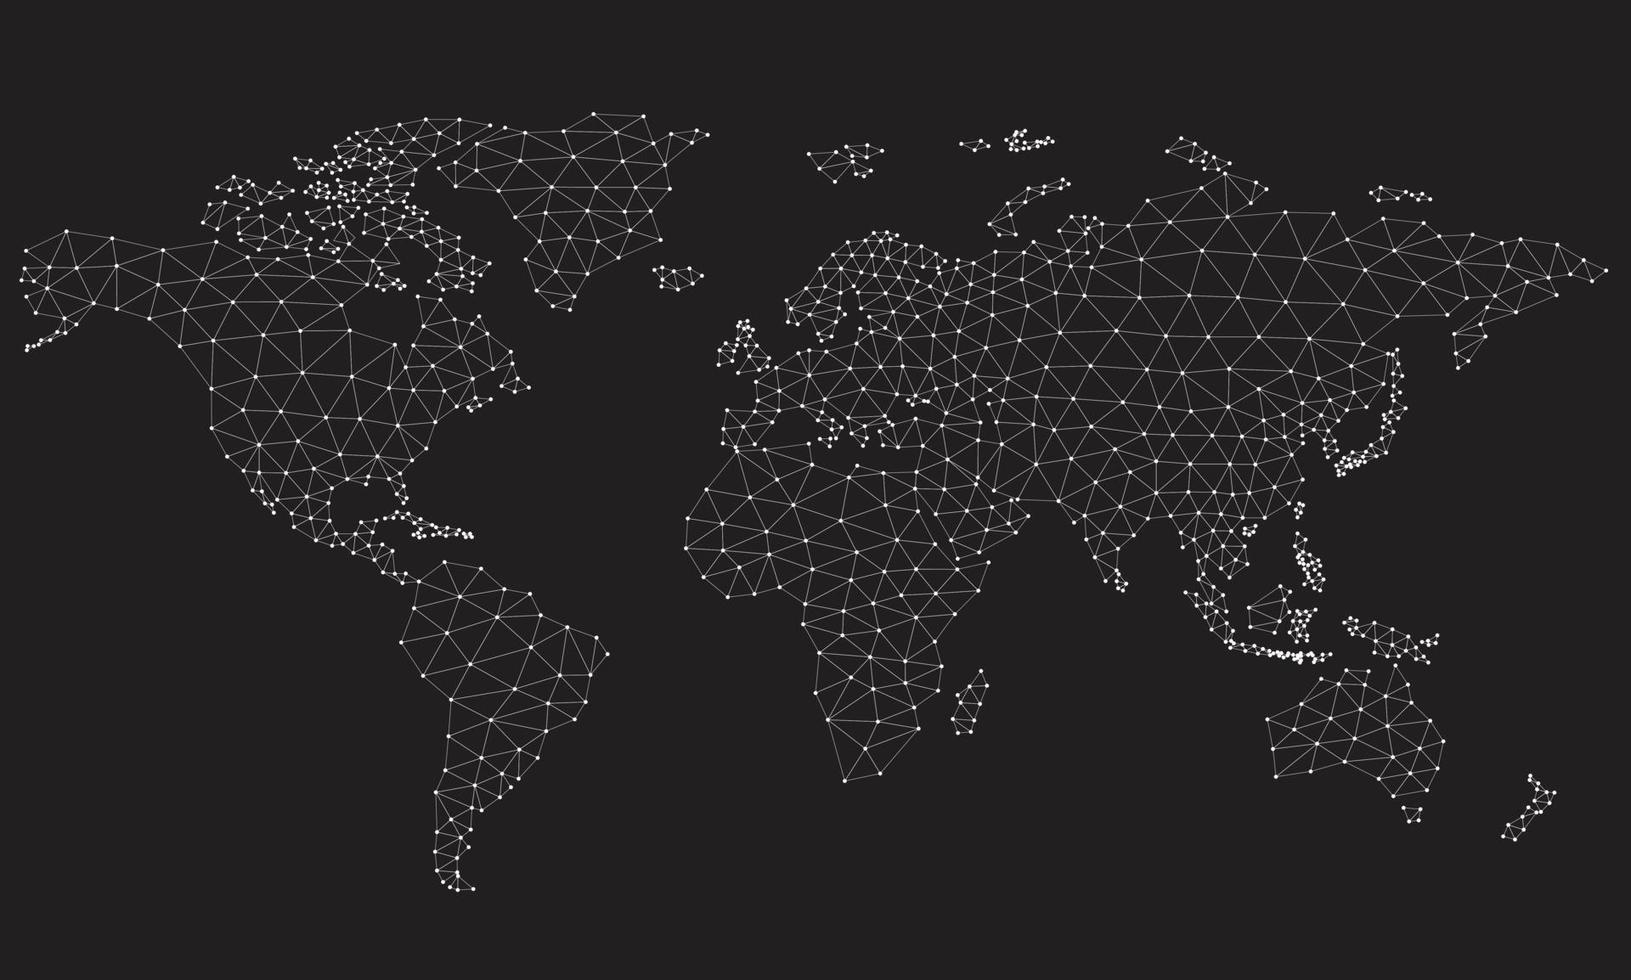 Vector low polygonal world map.